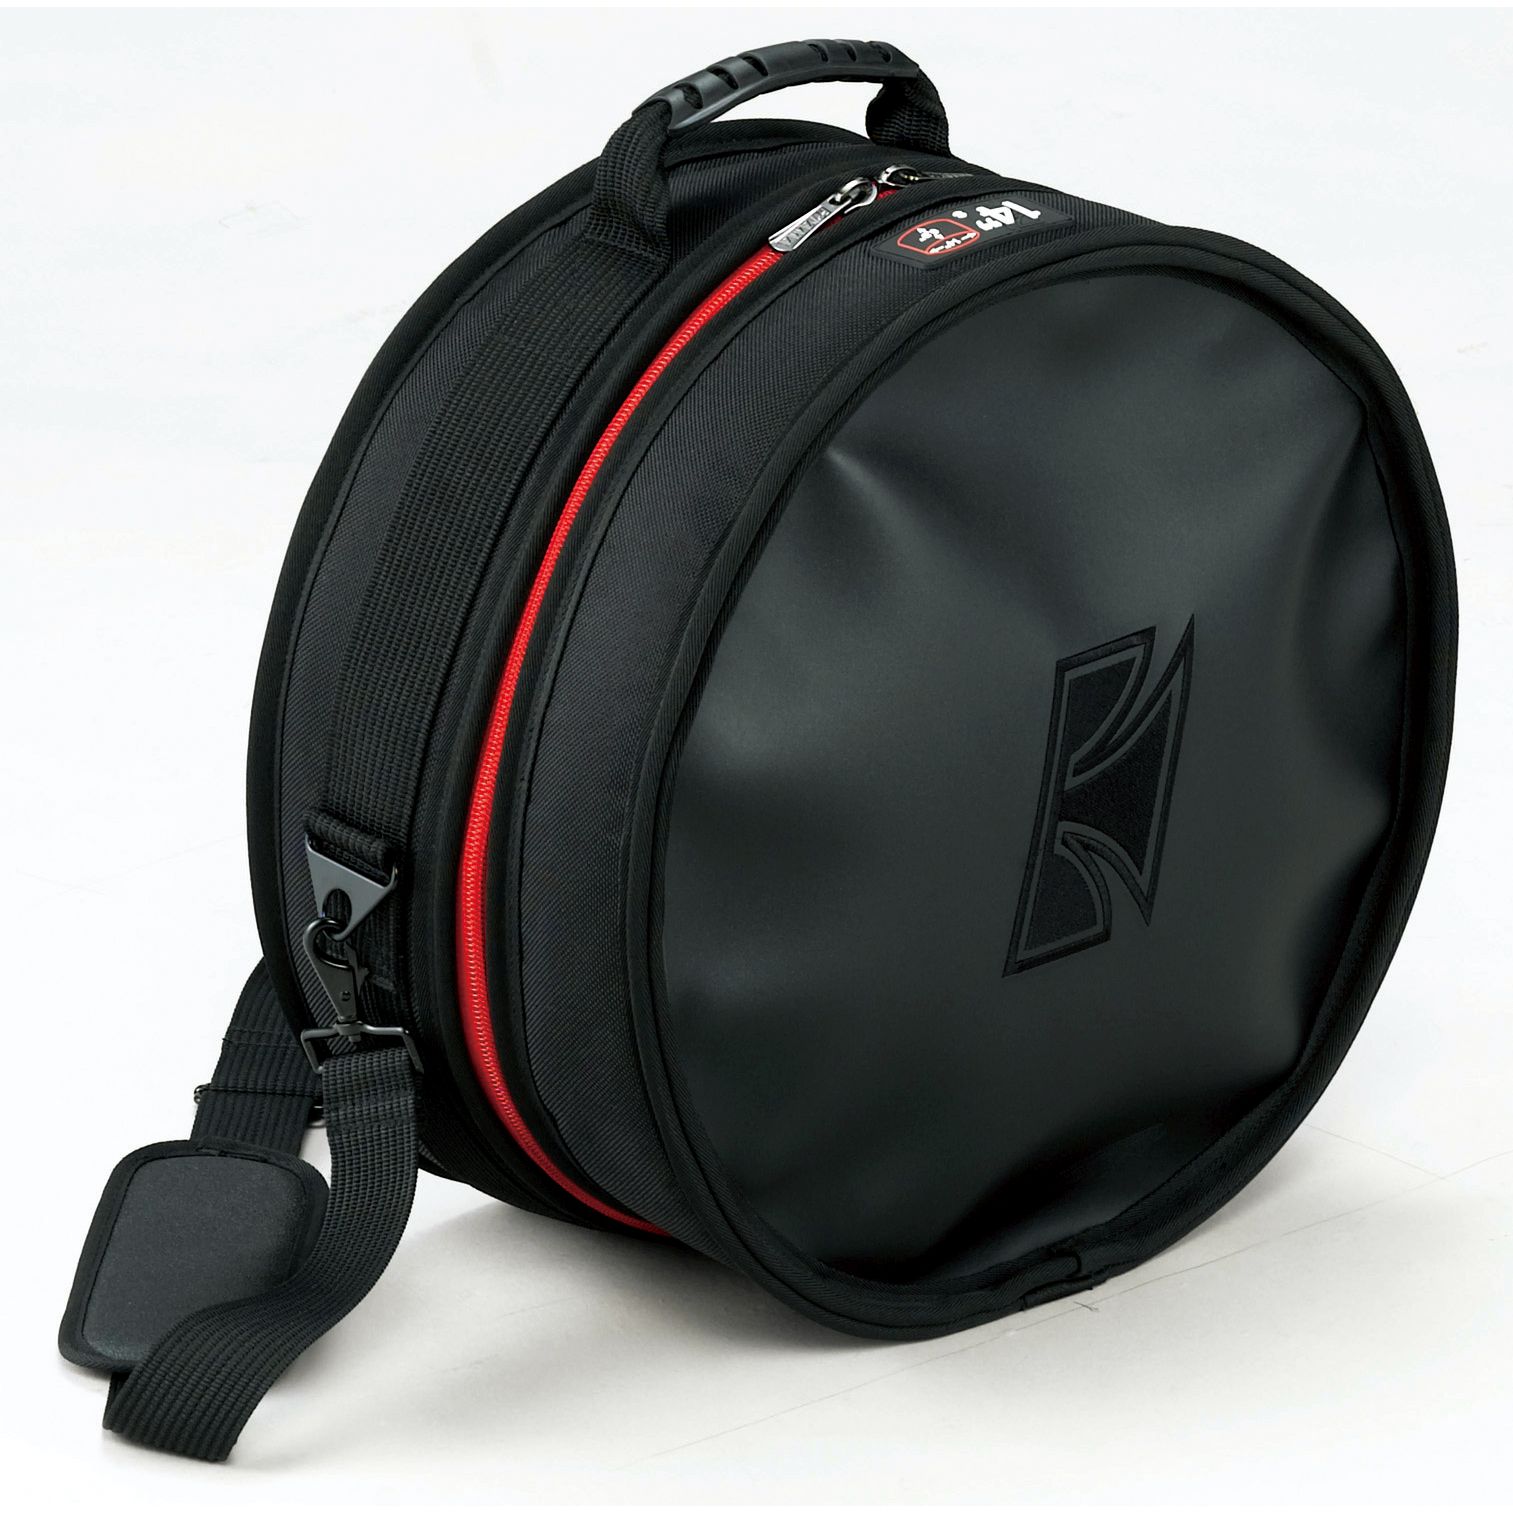 TAMA Powerpad Series Drum Bag - 14" x 5,5" Snare Drum